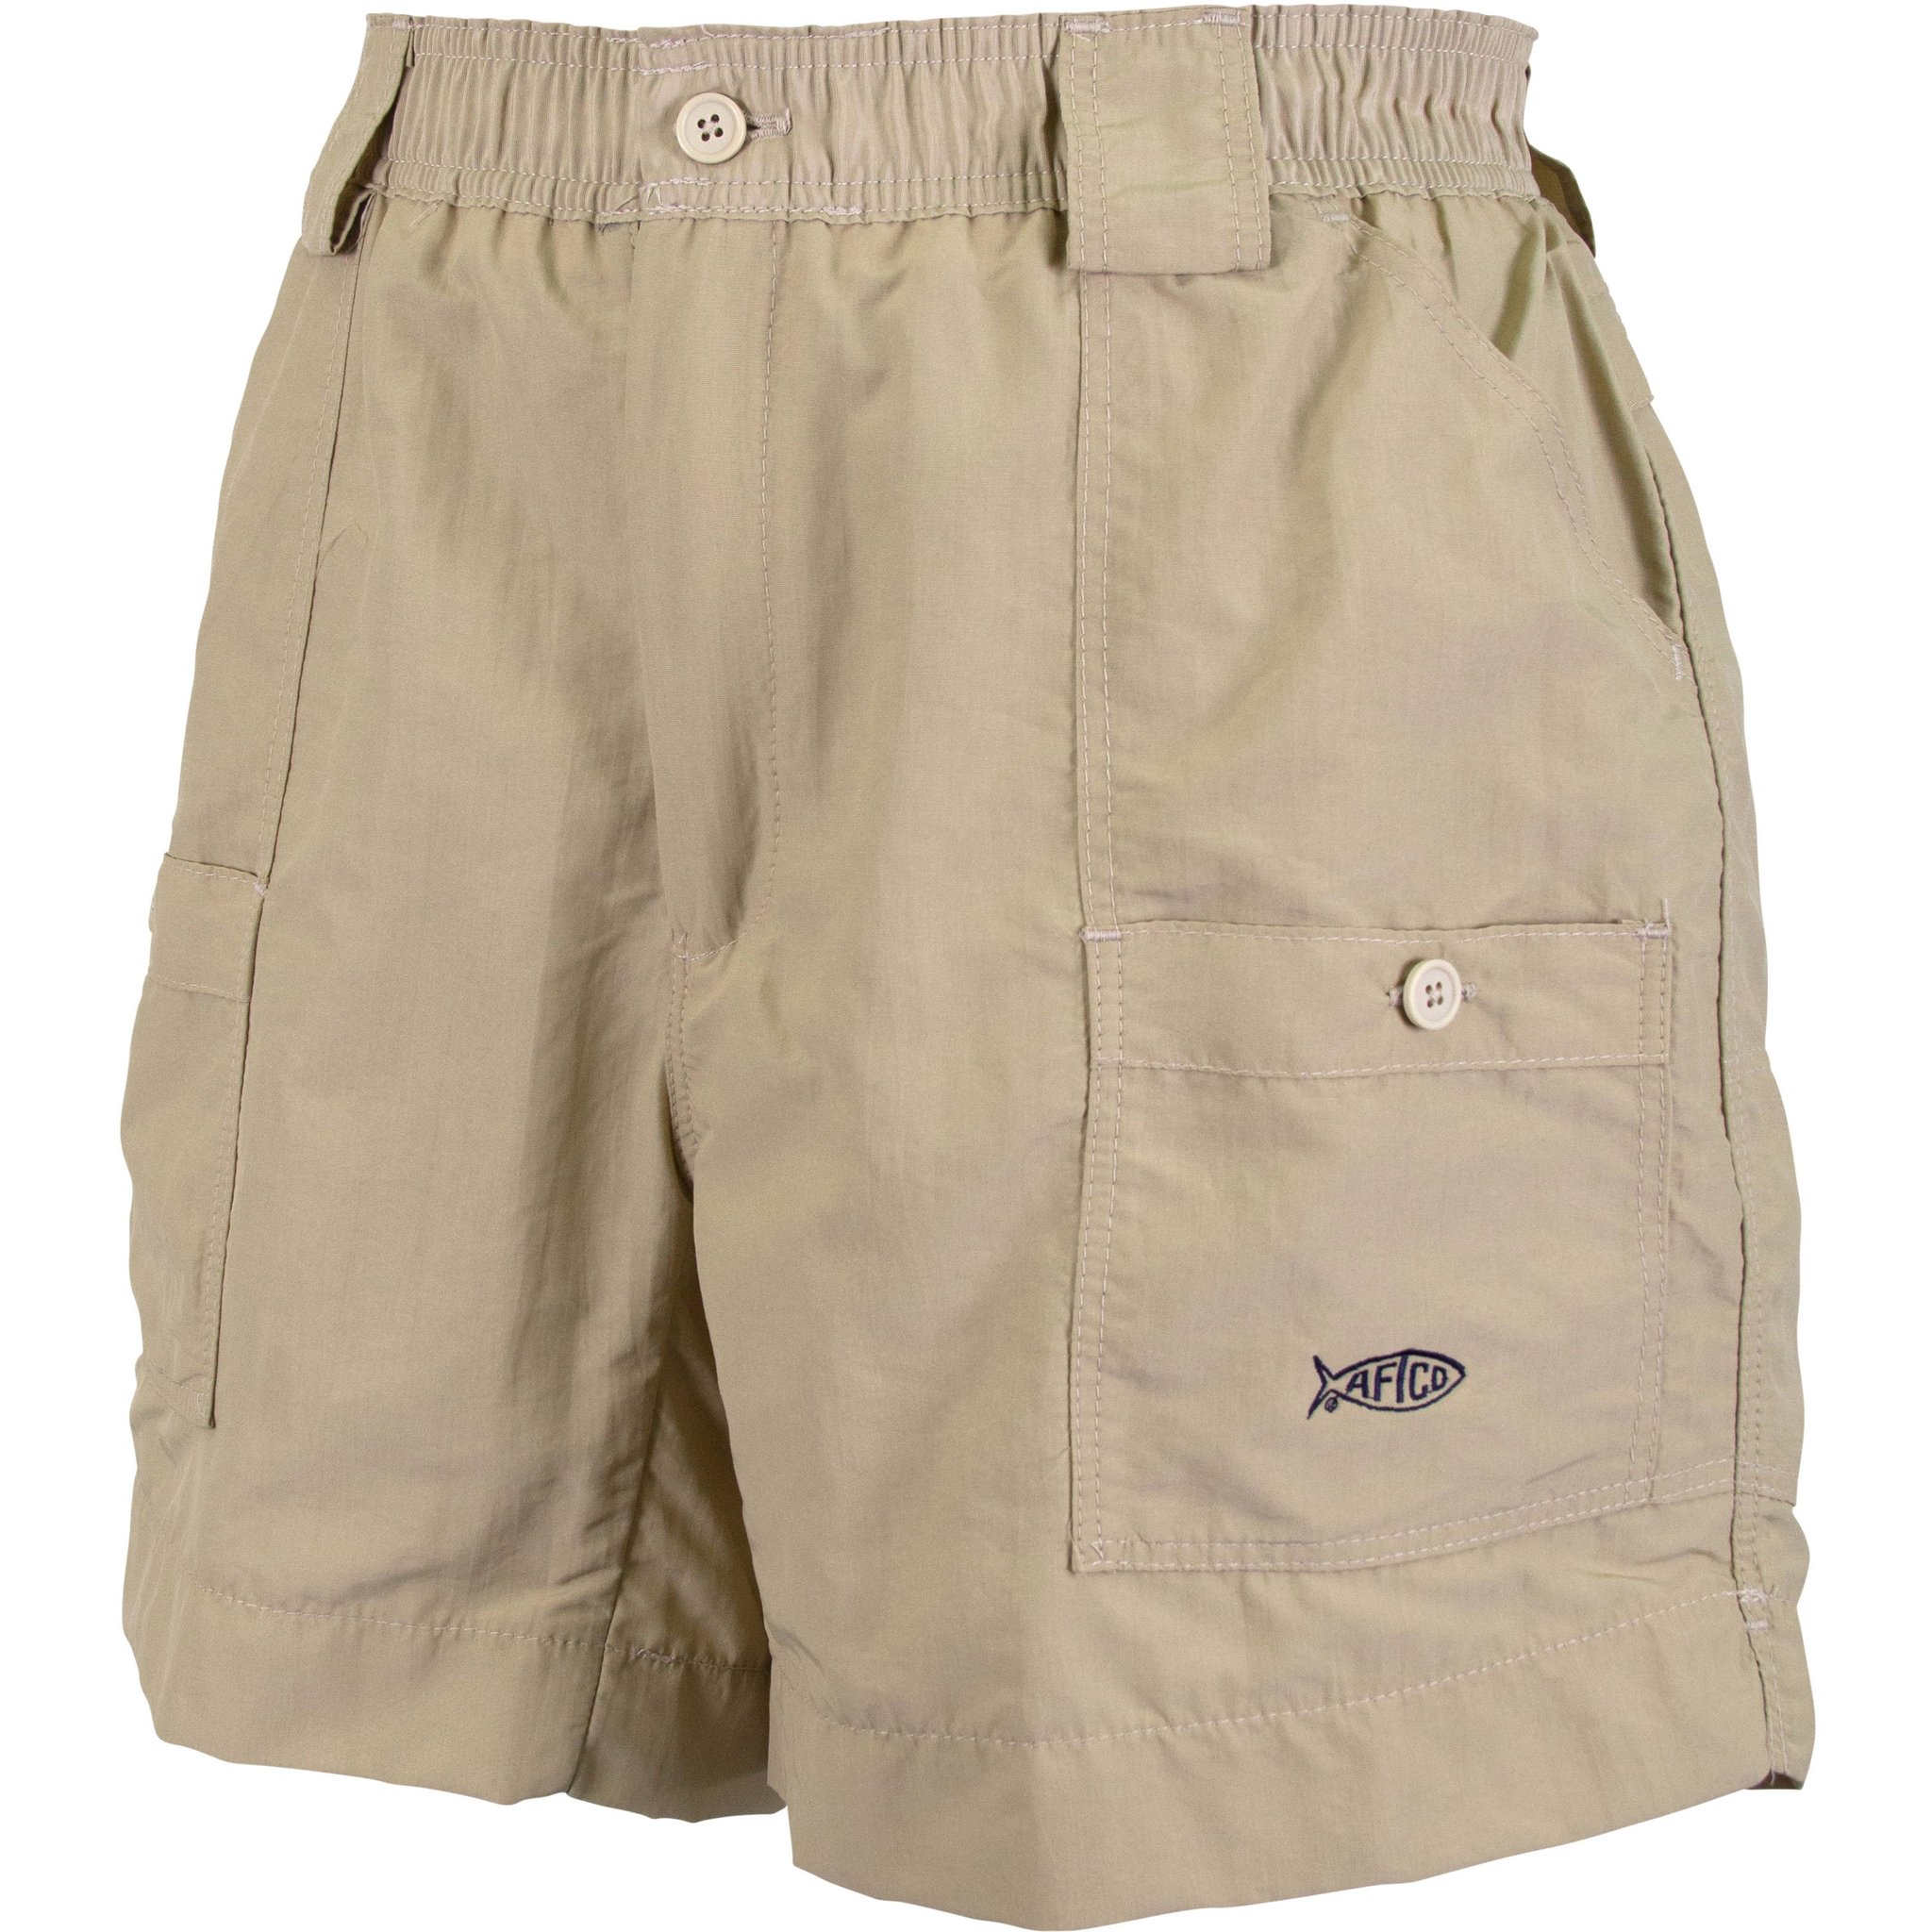 Men AFTCO Original Fishing Shorts Mo1 Navy 7 Pockets Elastic Waist